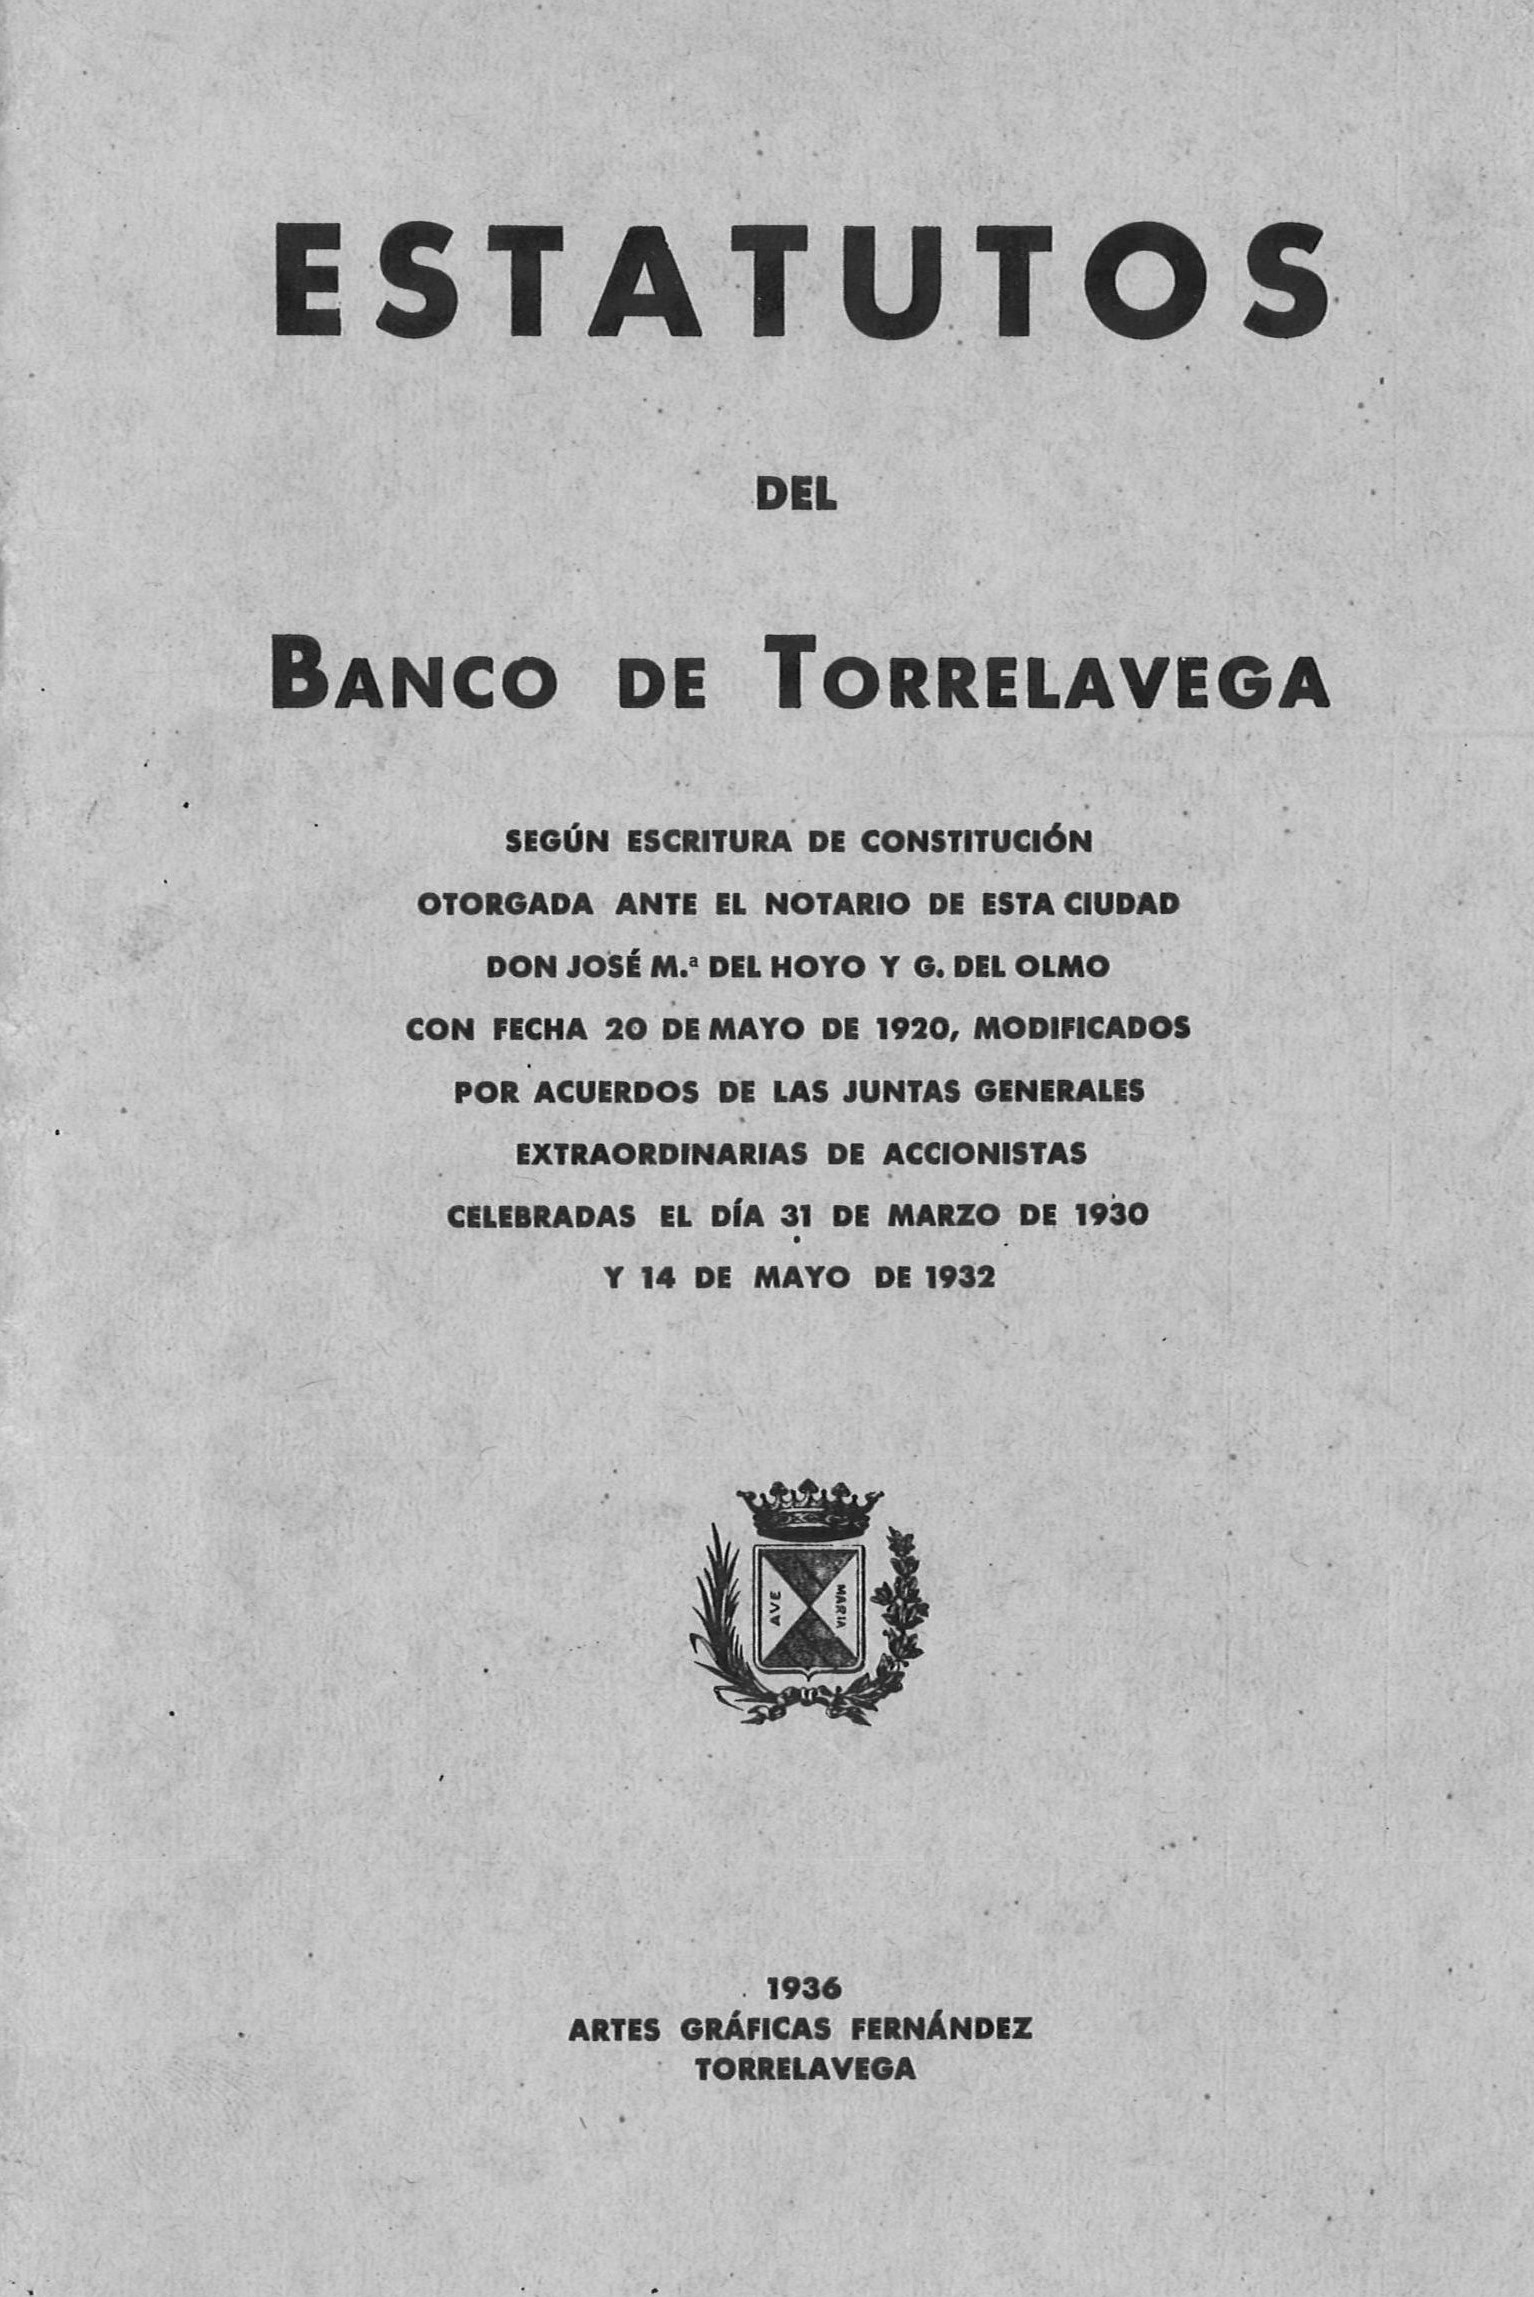 Banco de Torrelavega